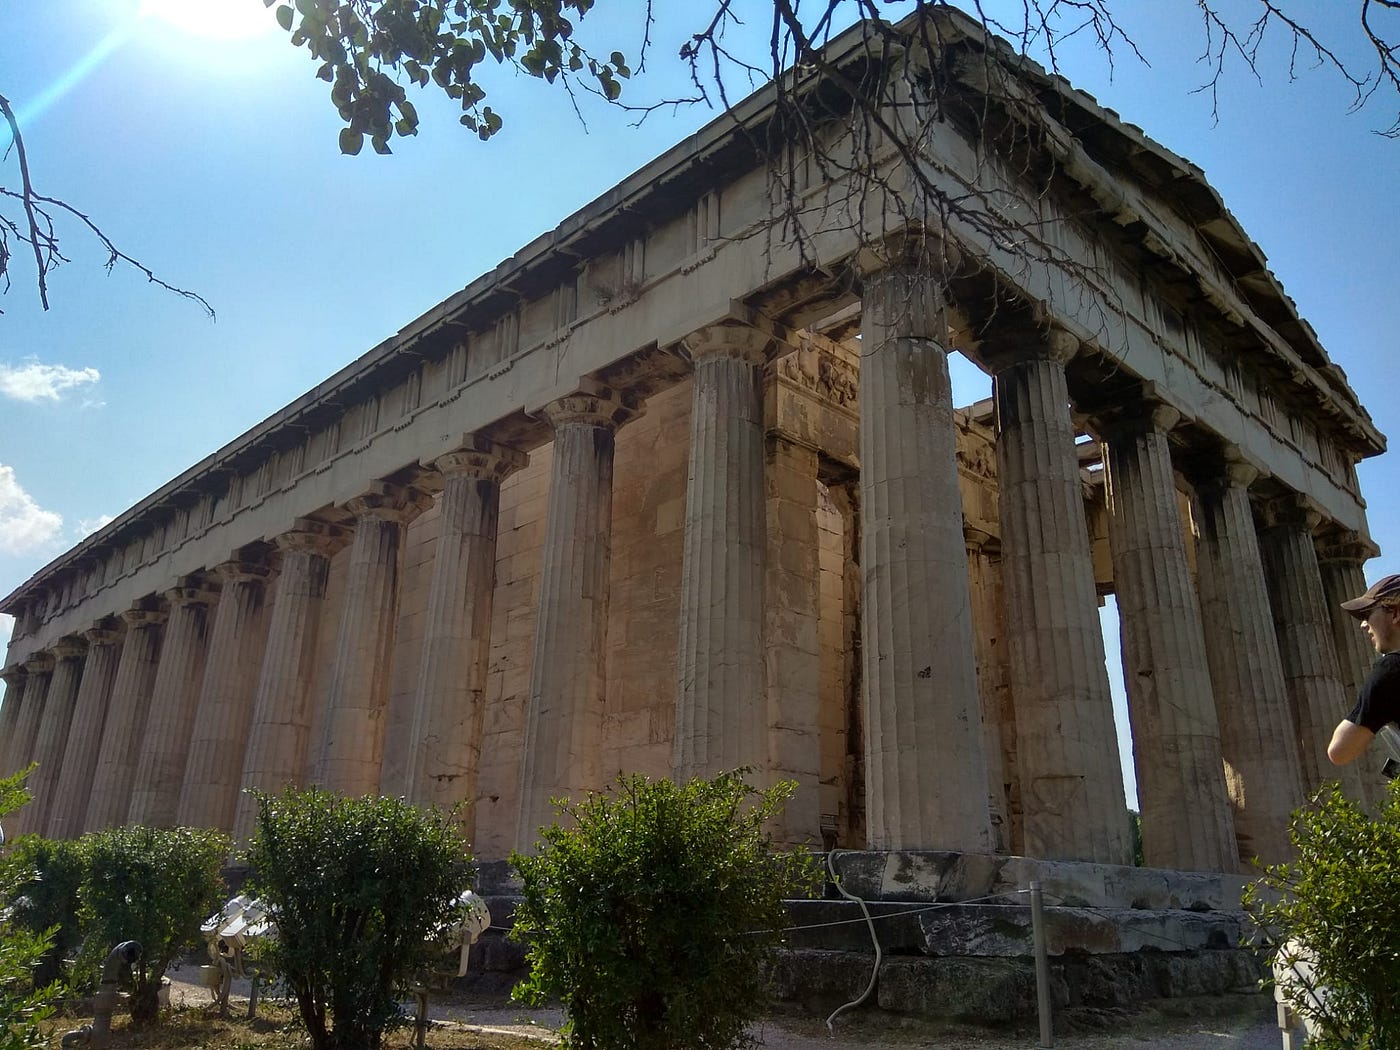 File:Hephaistos.temple.AC.02.jpg - Wikimedia Commons